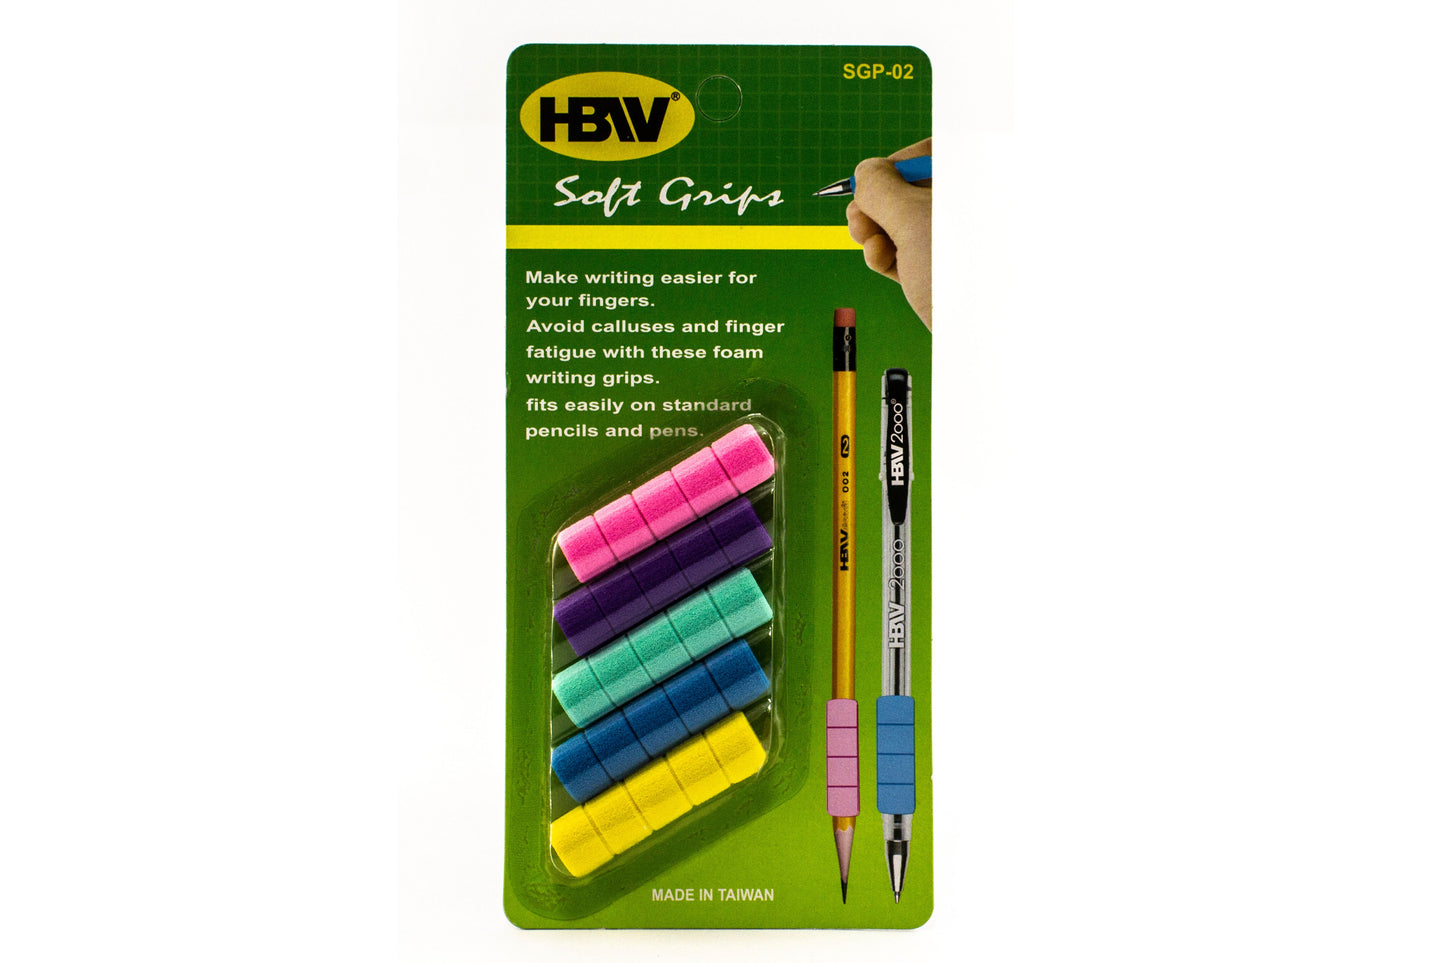 HBW Soft Grips/SGP-02